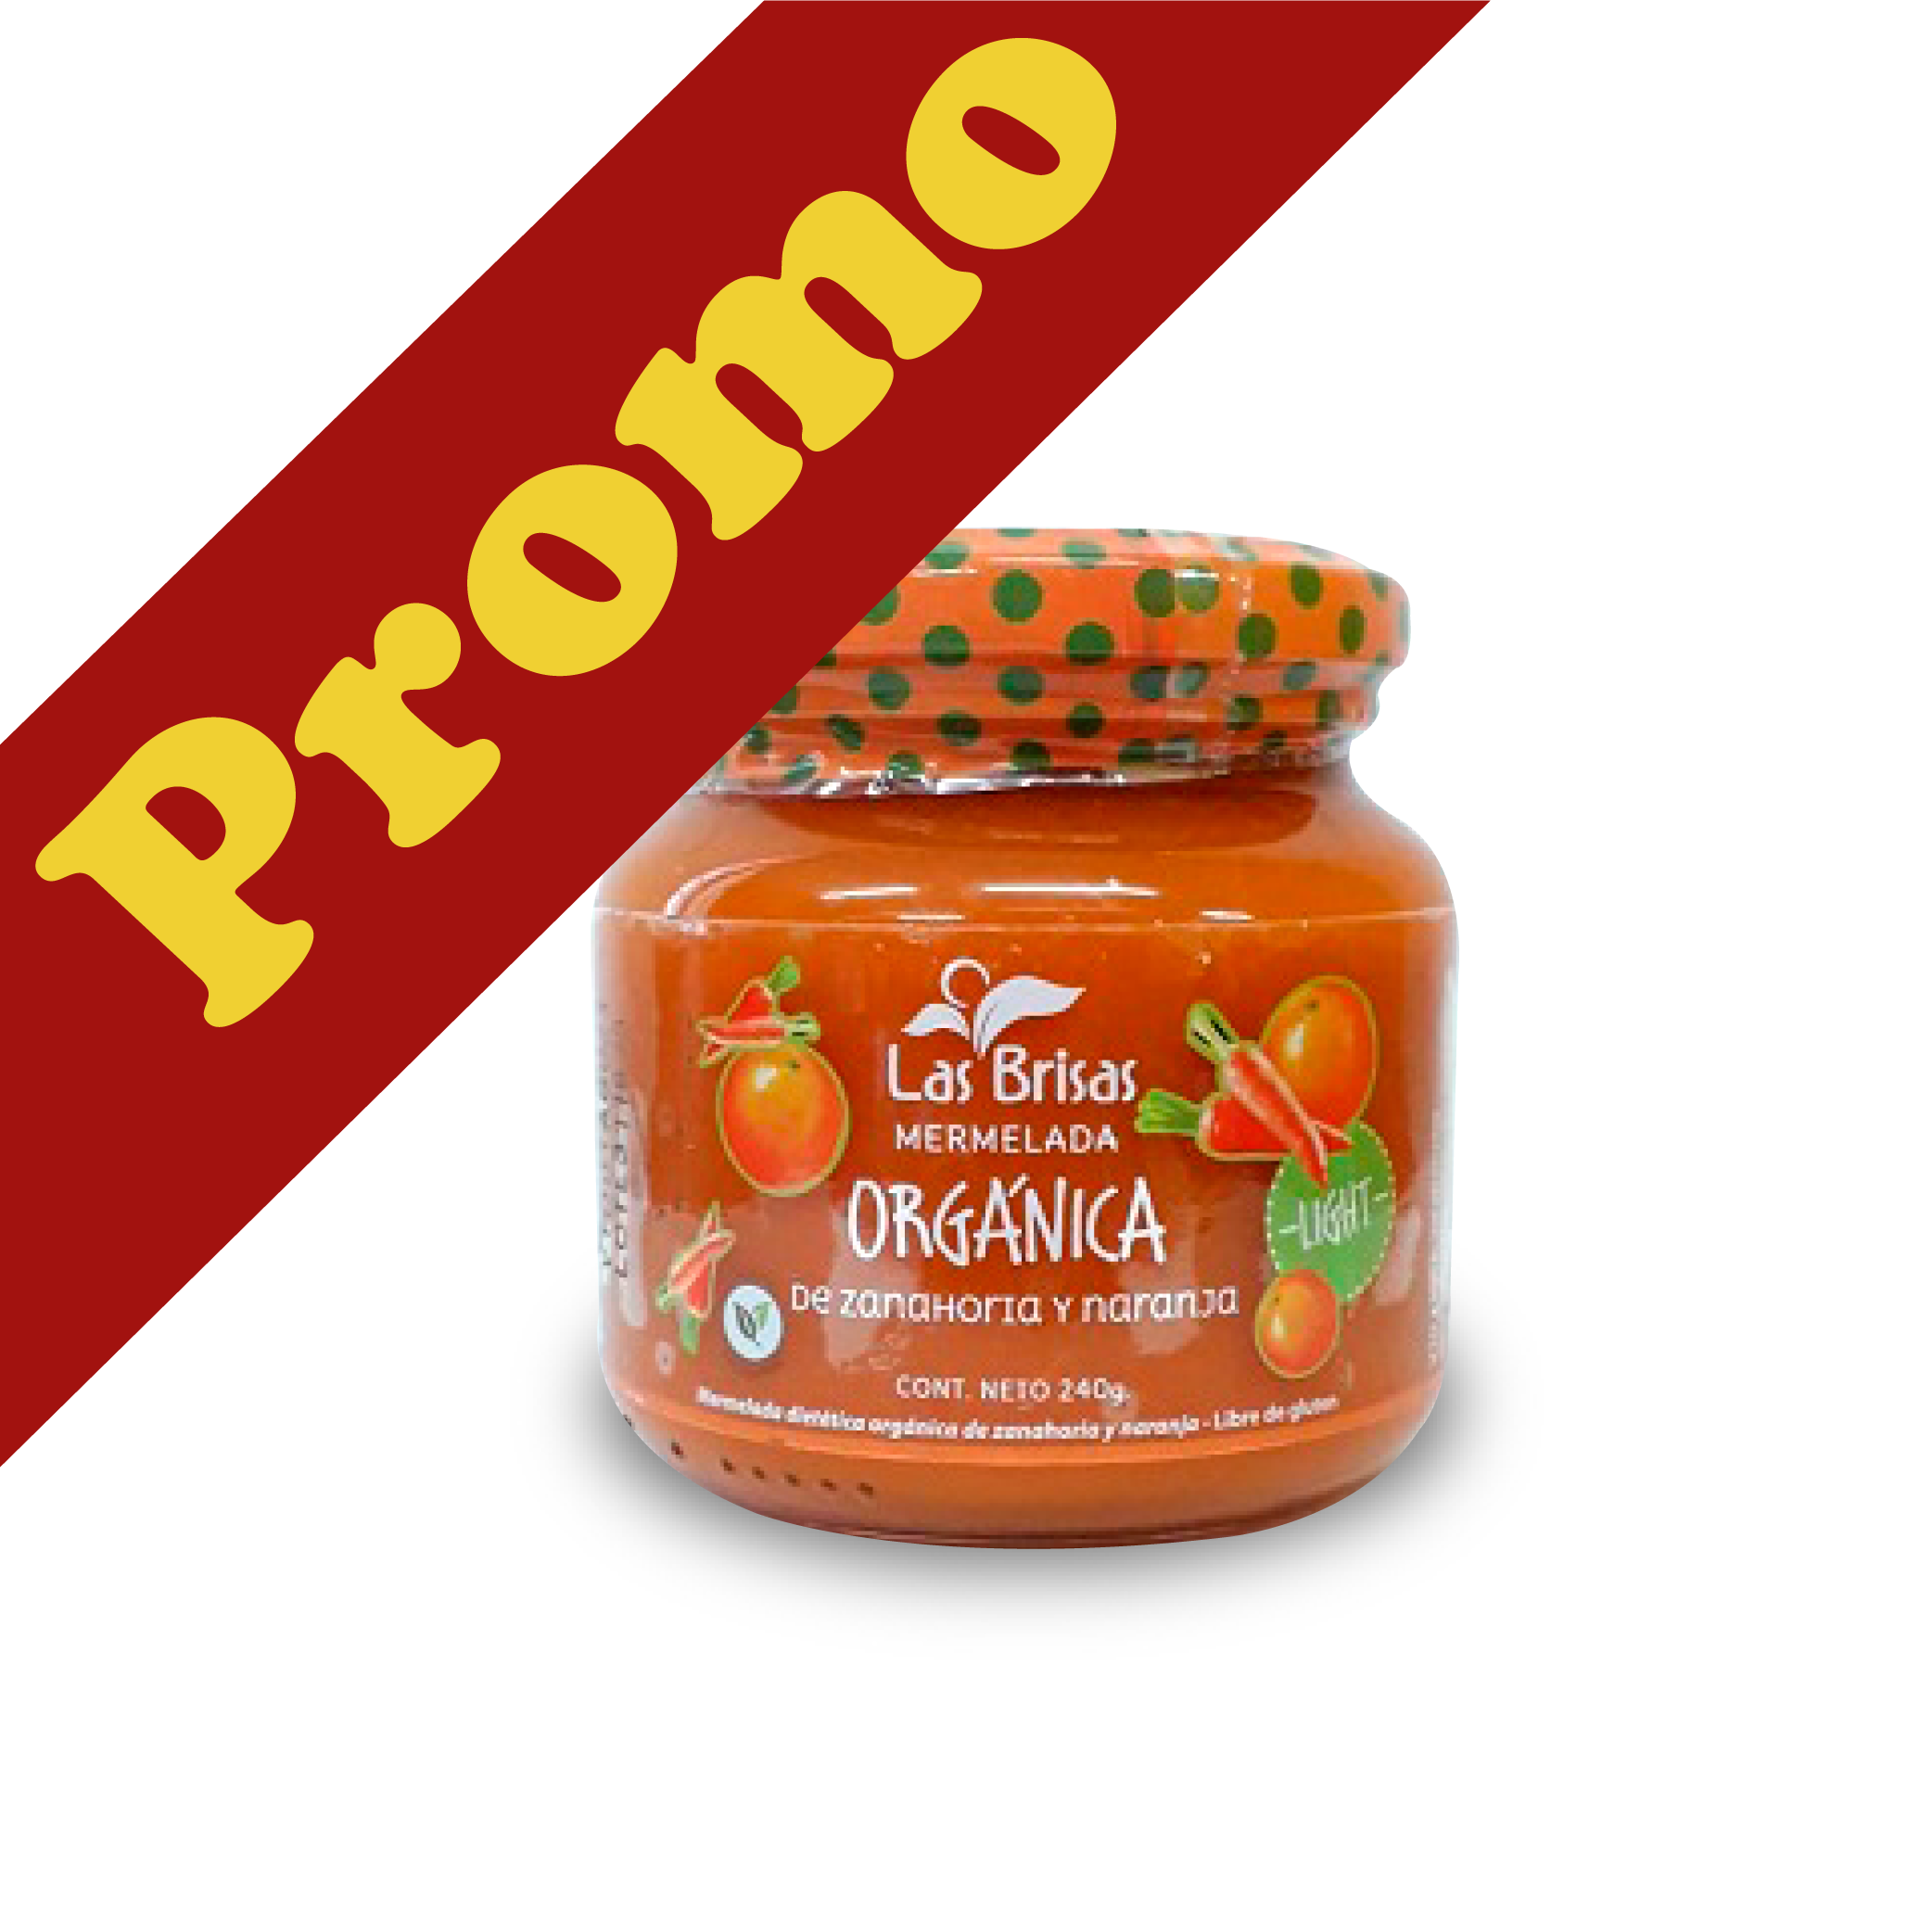 Las Brisas-Mermelada Organica Zanahoria-Naranja S/Azucar PROMO 3 x 240gr